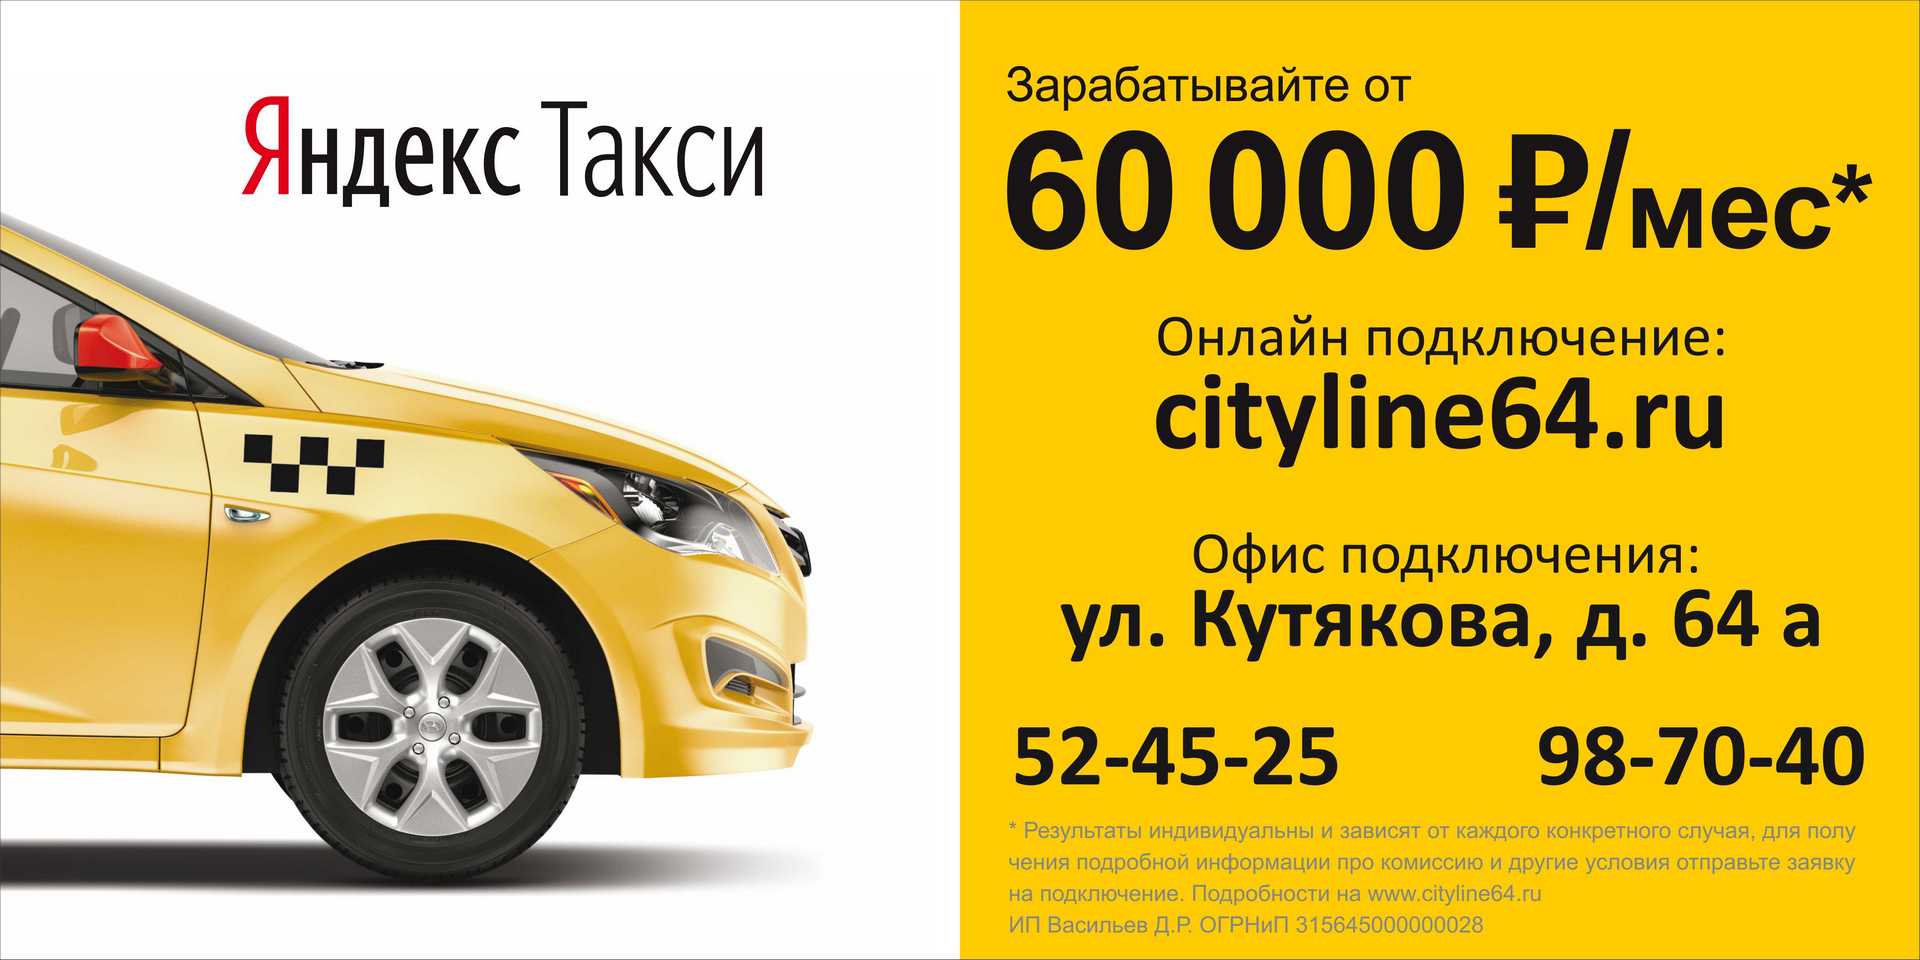 Яндекс такси баннер